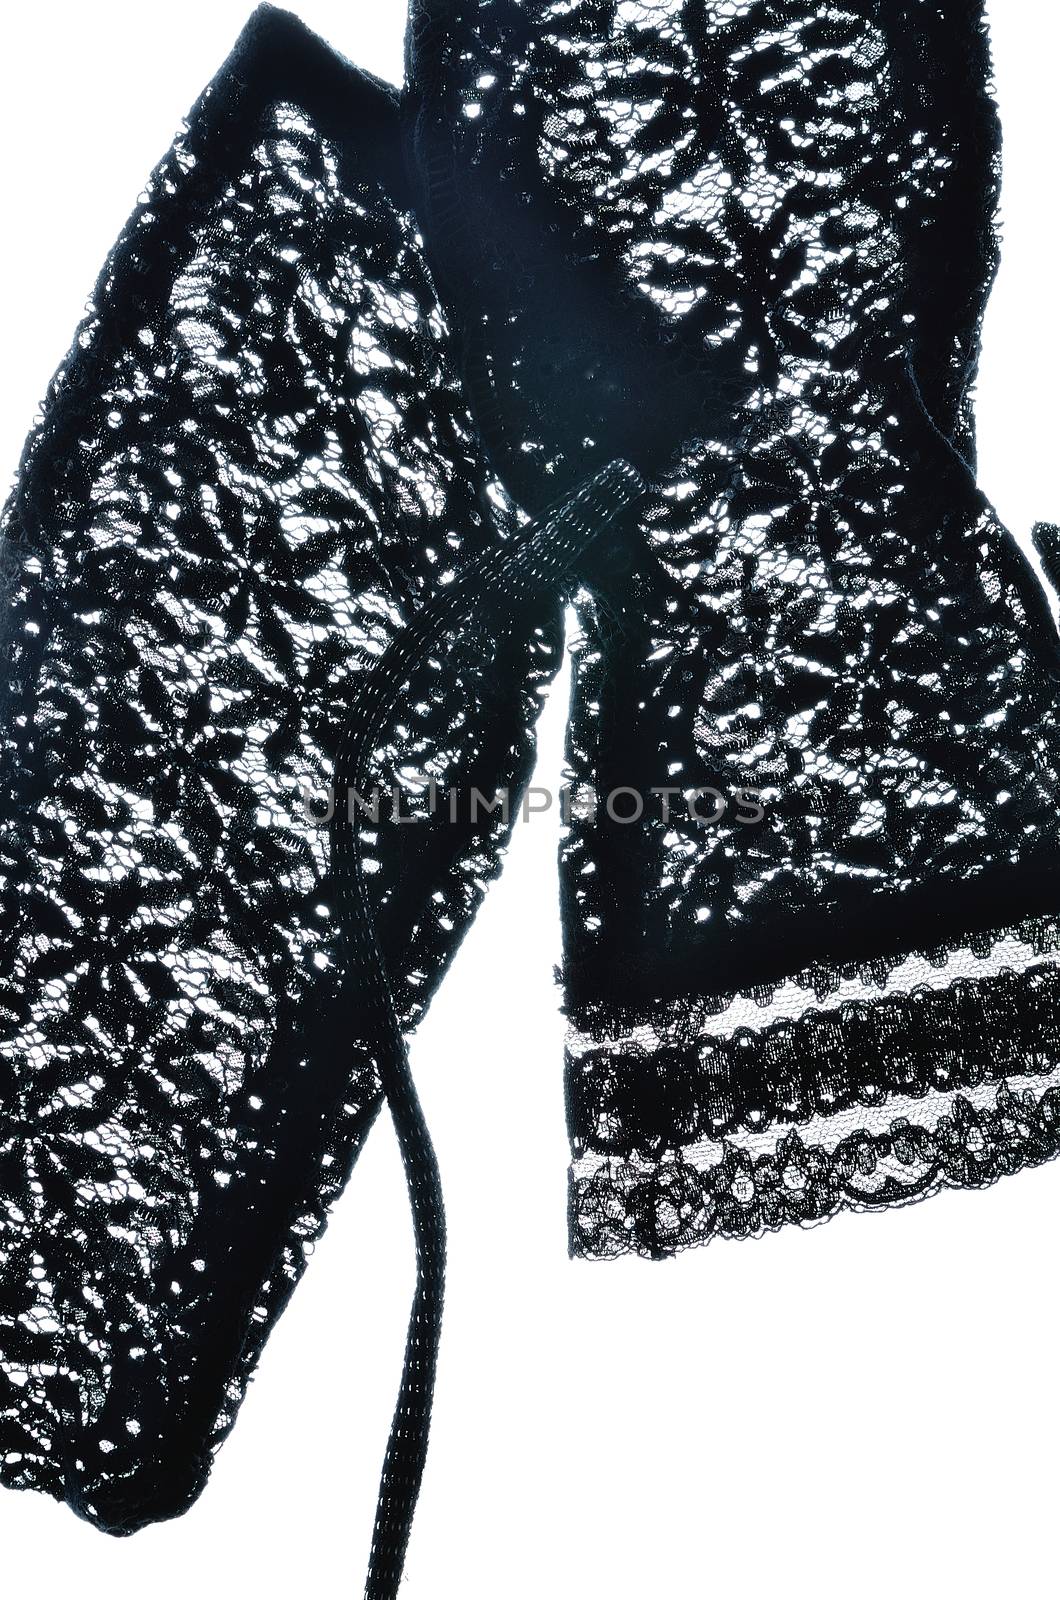 Black Ivory lace gloves on white background